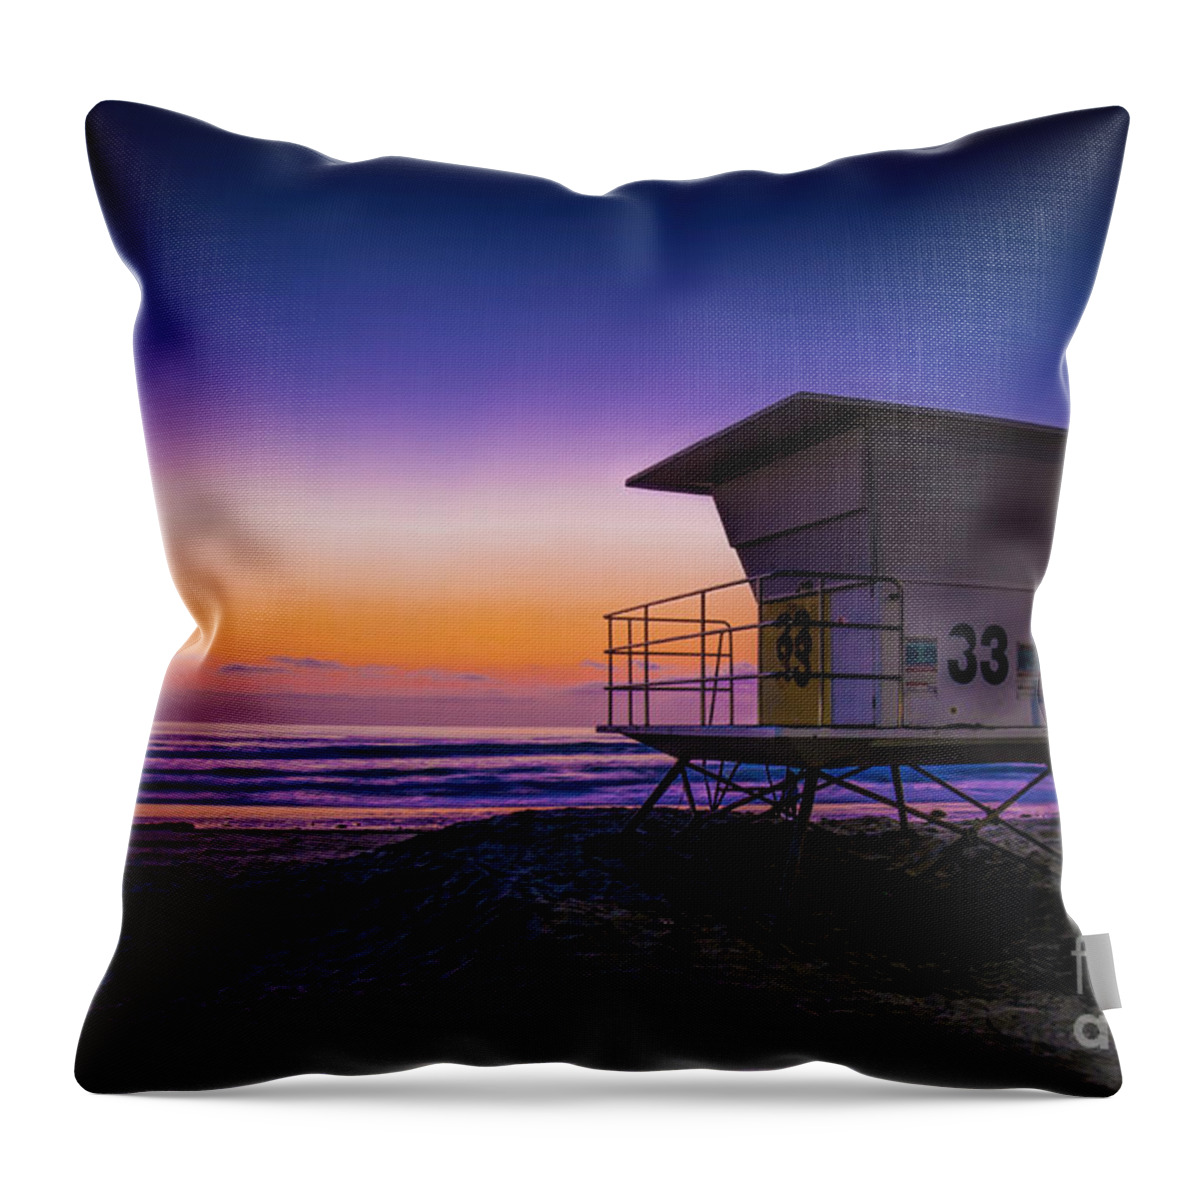 La Jolla Throw Pillow featuring the photograph La Jolla Beach Sunset by Ken Johnson